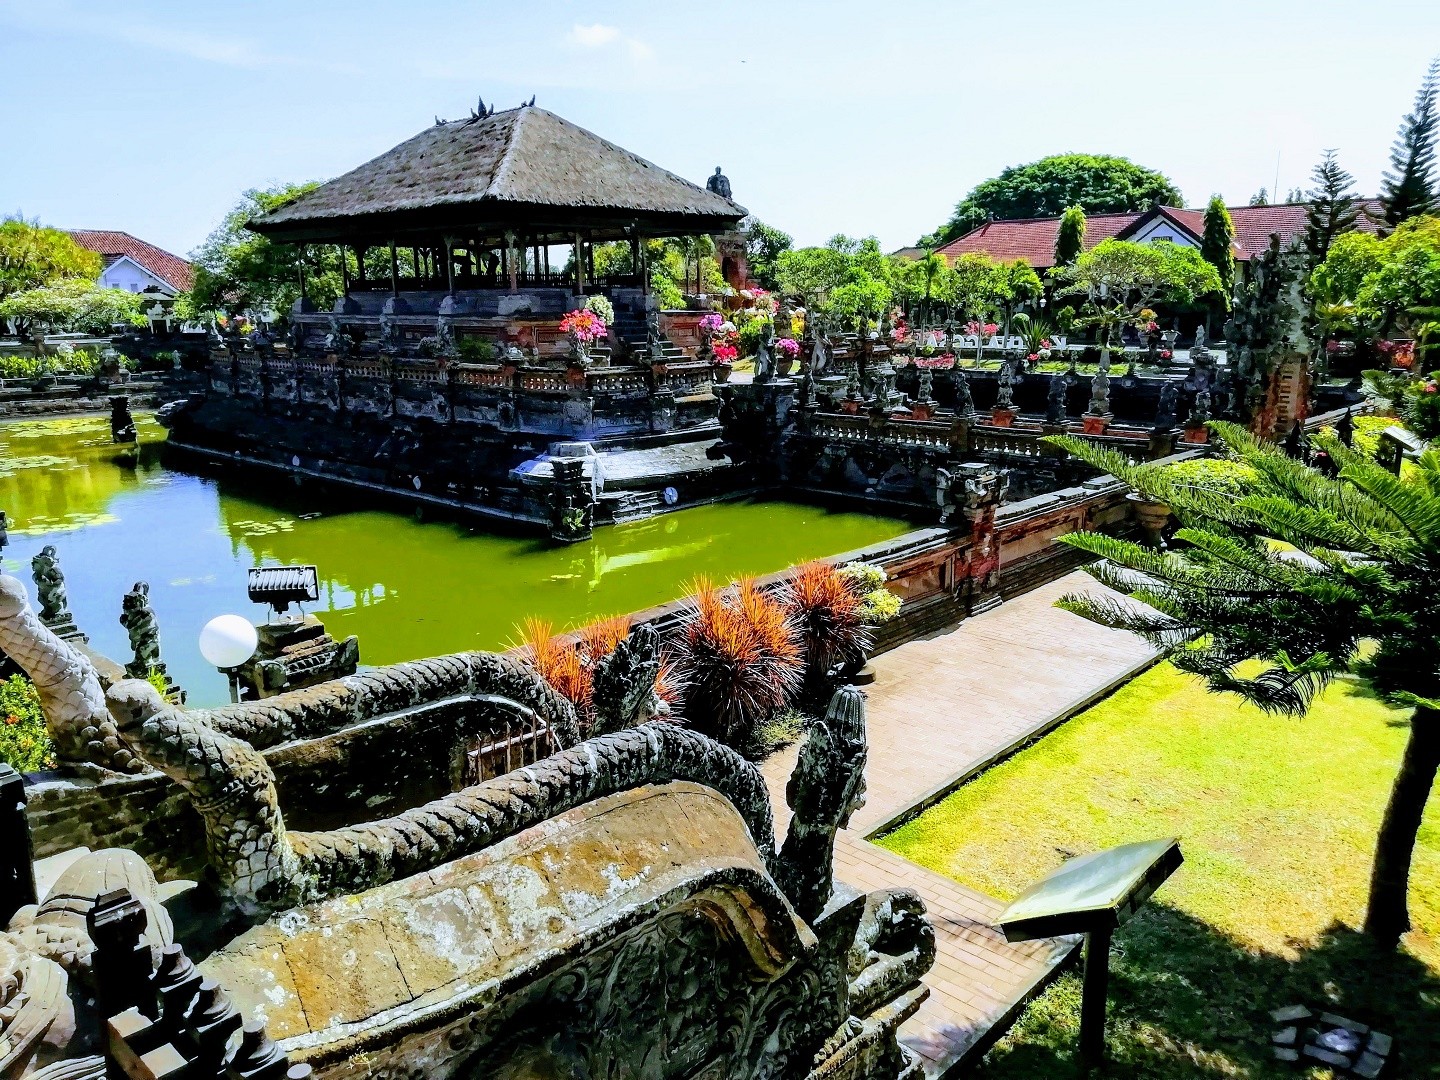 Bangunan Bale Kambang Klungkung Bali dikelilingi oleh kolam Taman Gili